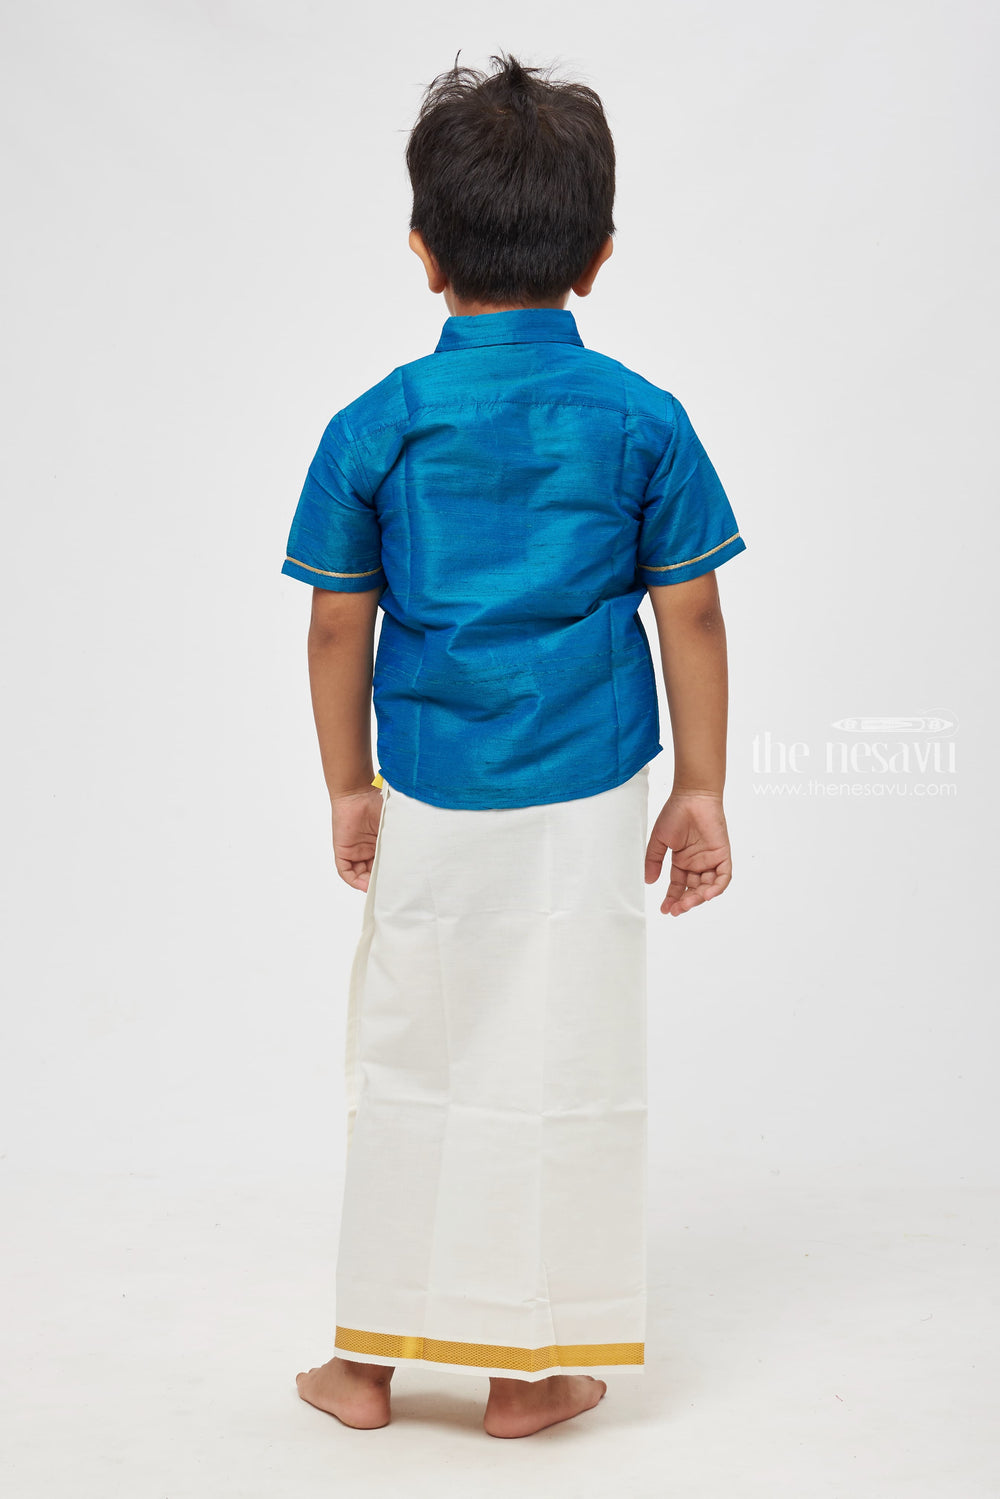 The Nesavu Boys Silk Shirt Vibrant Teal Blue Silk Shirt for Boys: A Modern Twist to Traditional Elegance Nesavu Boys Radiant Teal Blue Silk Shirt: Oceanic Hues Meet Urbane Sophistication | The Nesavu